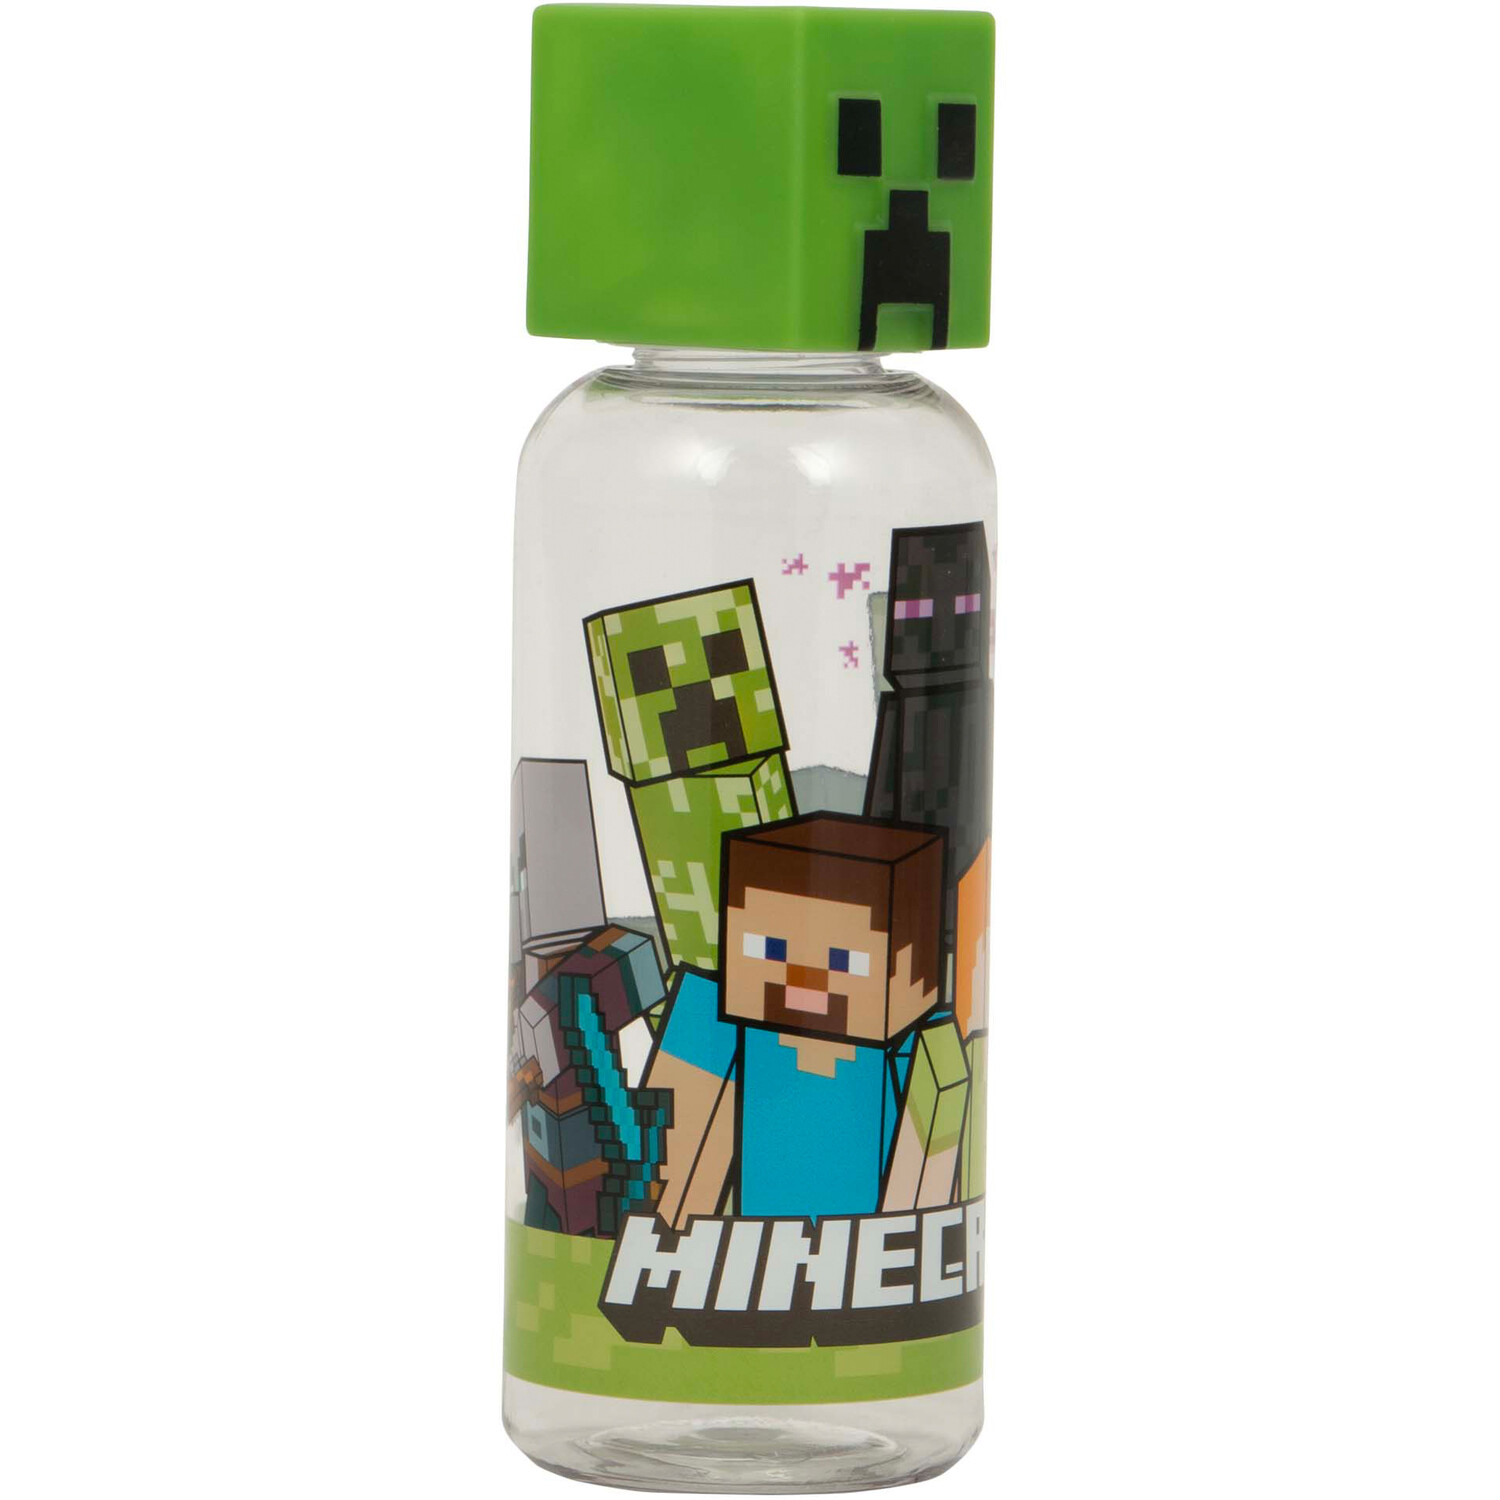 3D Minecraft Licensed Water Bottle - Green Image 1